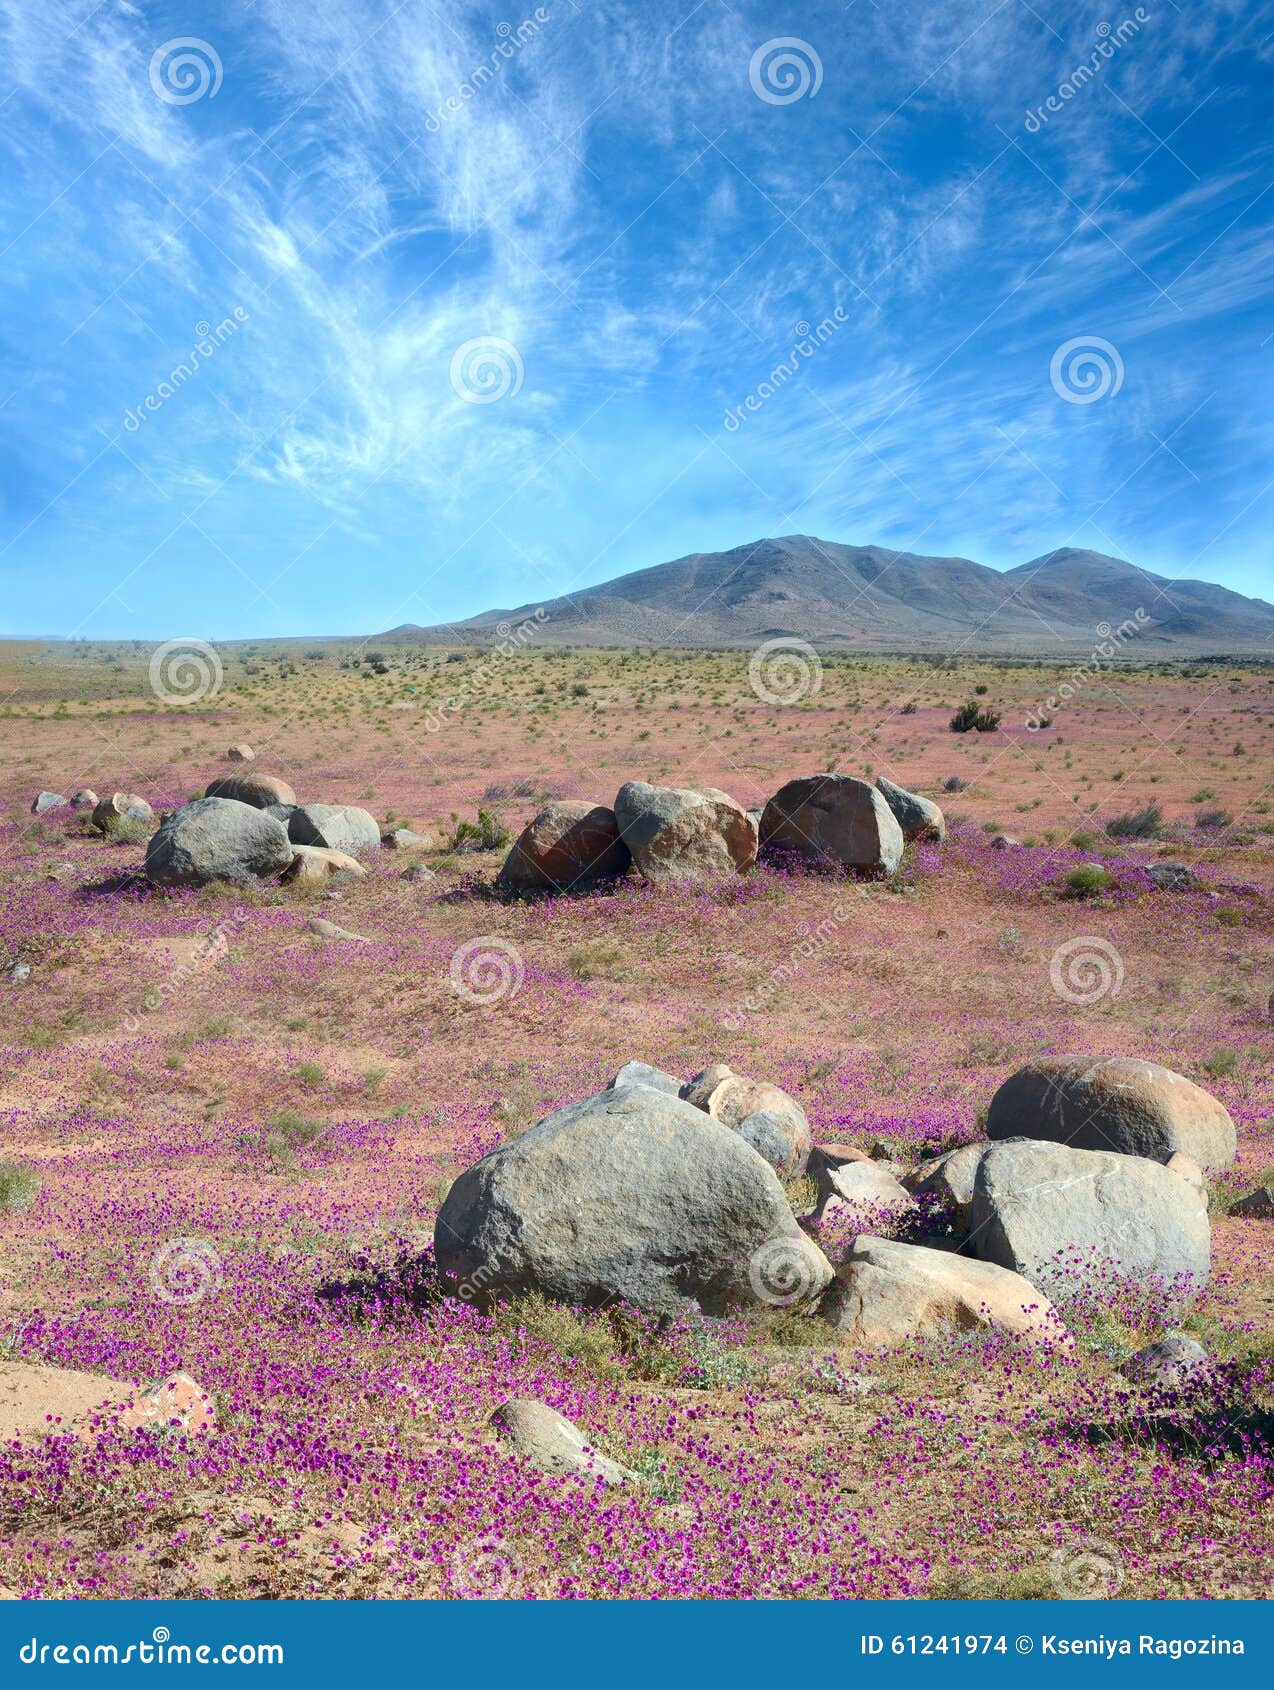 phenomenon of flowering desert in the chilean atacama